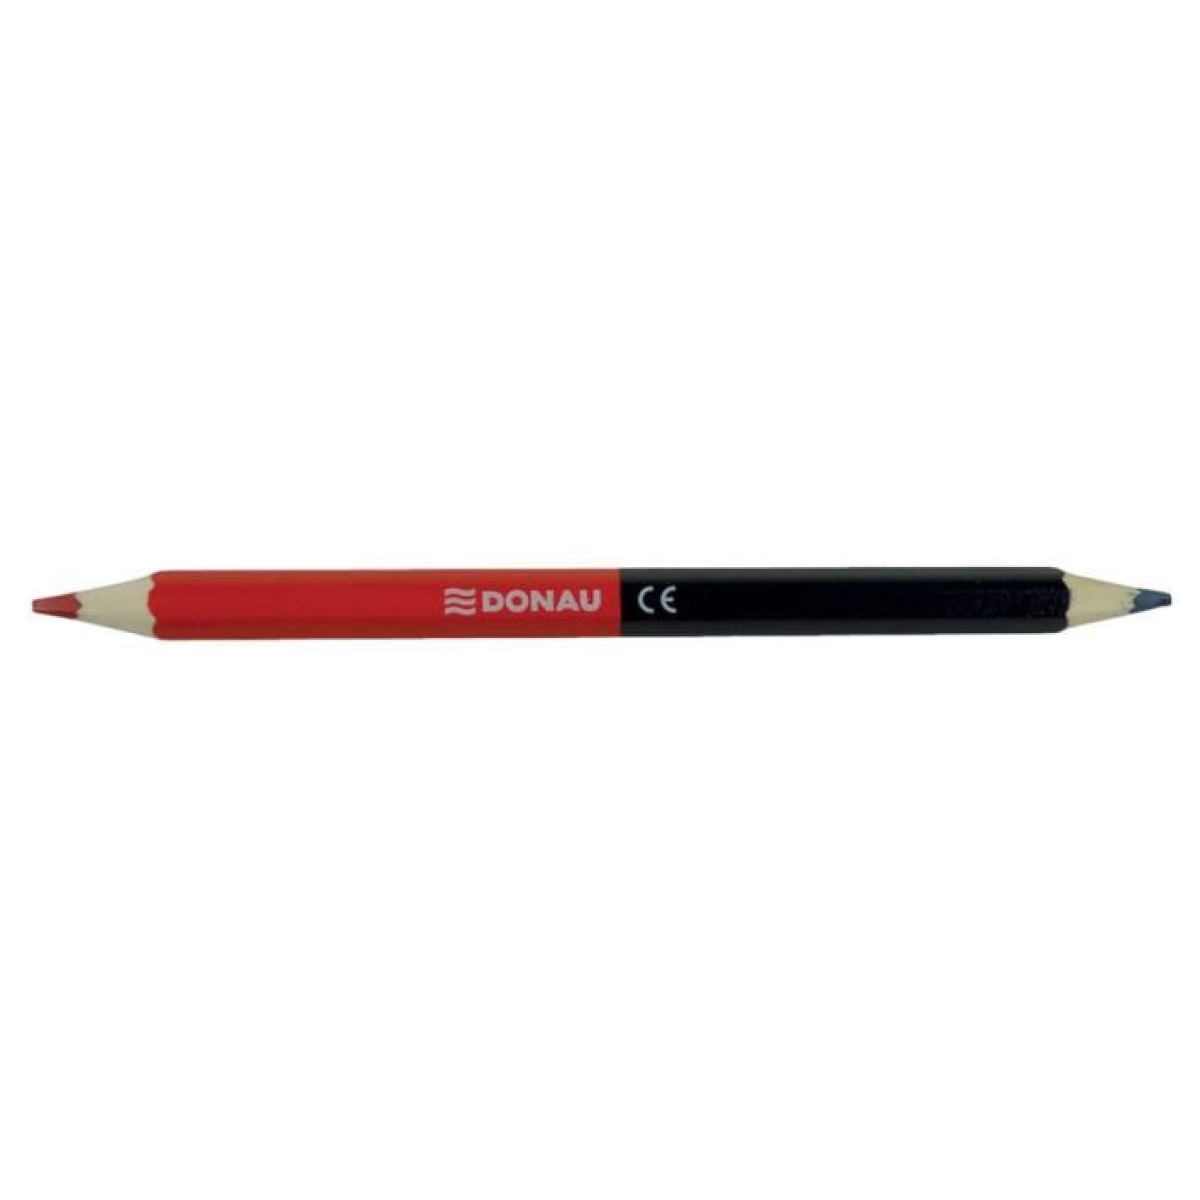 DonauColoured pencil syllabic pencil Donau 3811101-04 330252-Price for 12 pcs.Article-No: 9004546439820